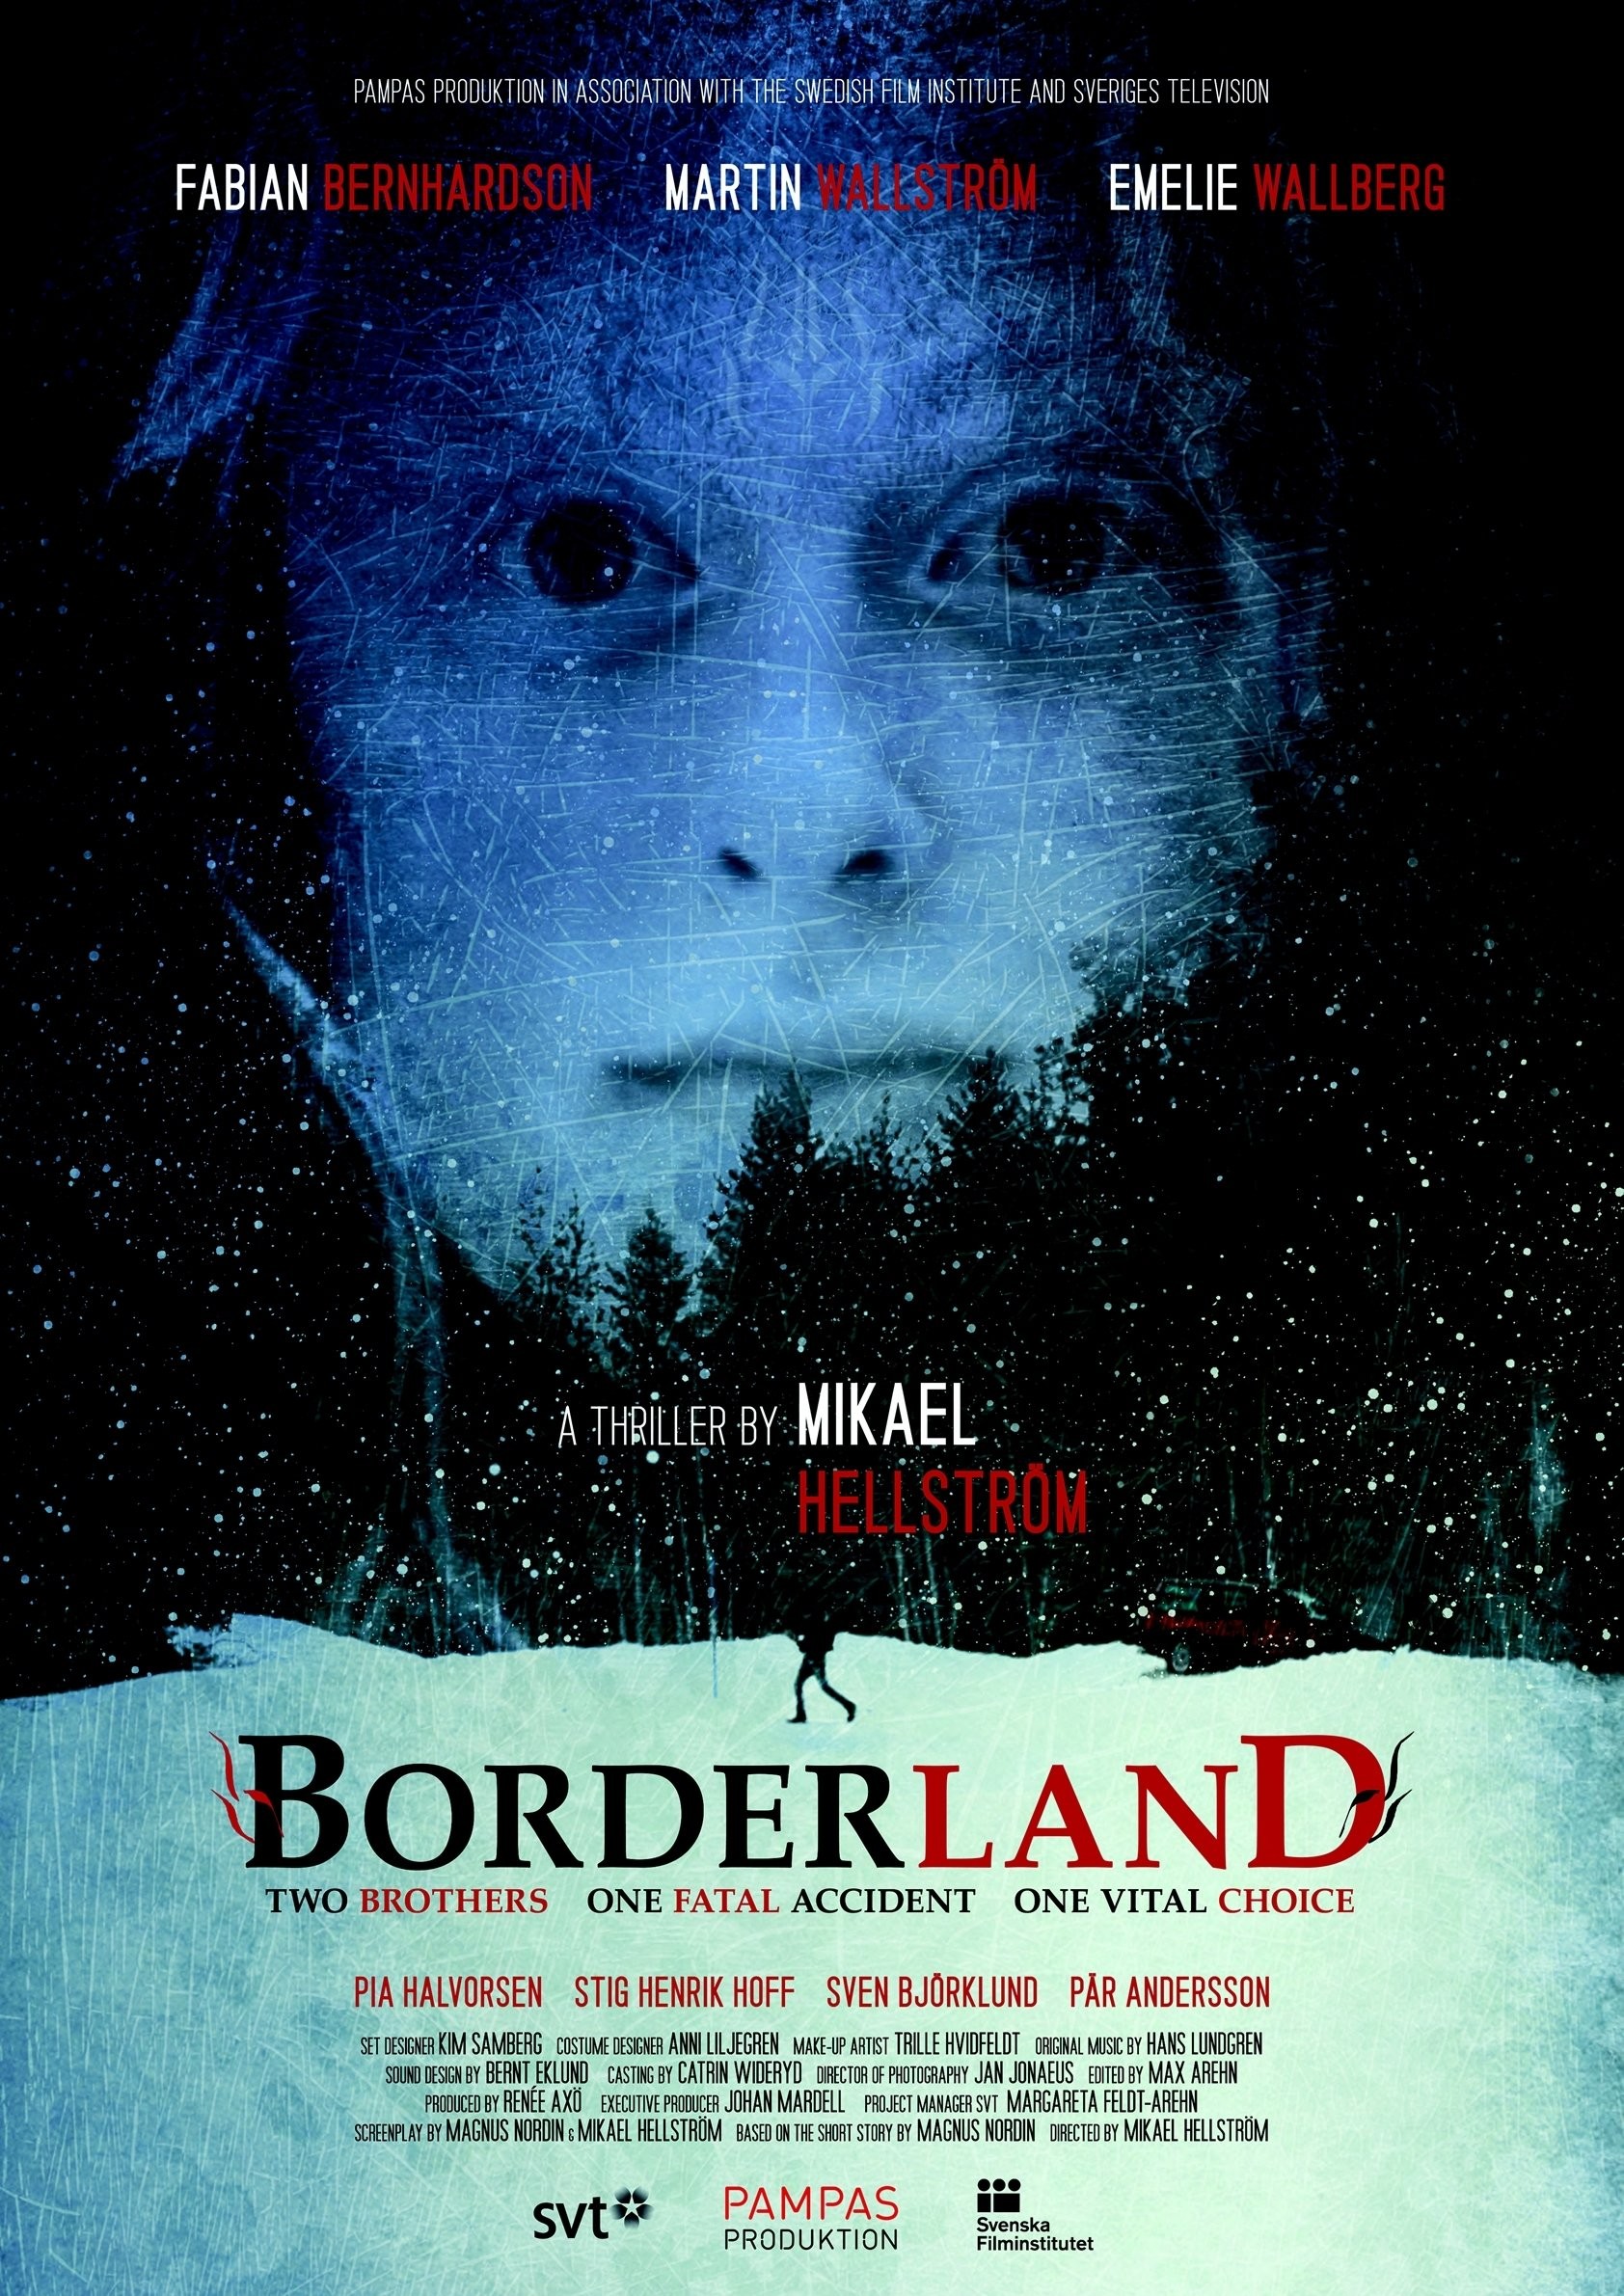 Mega Sized Movie Poster Image for Vid skogens rand